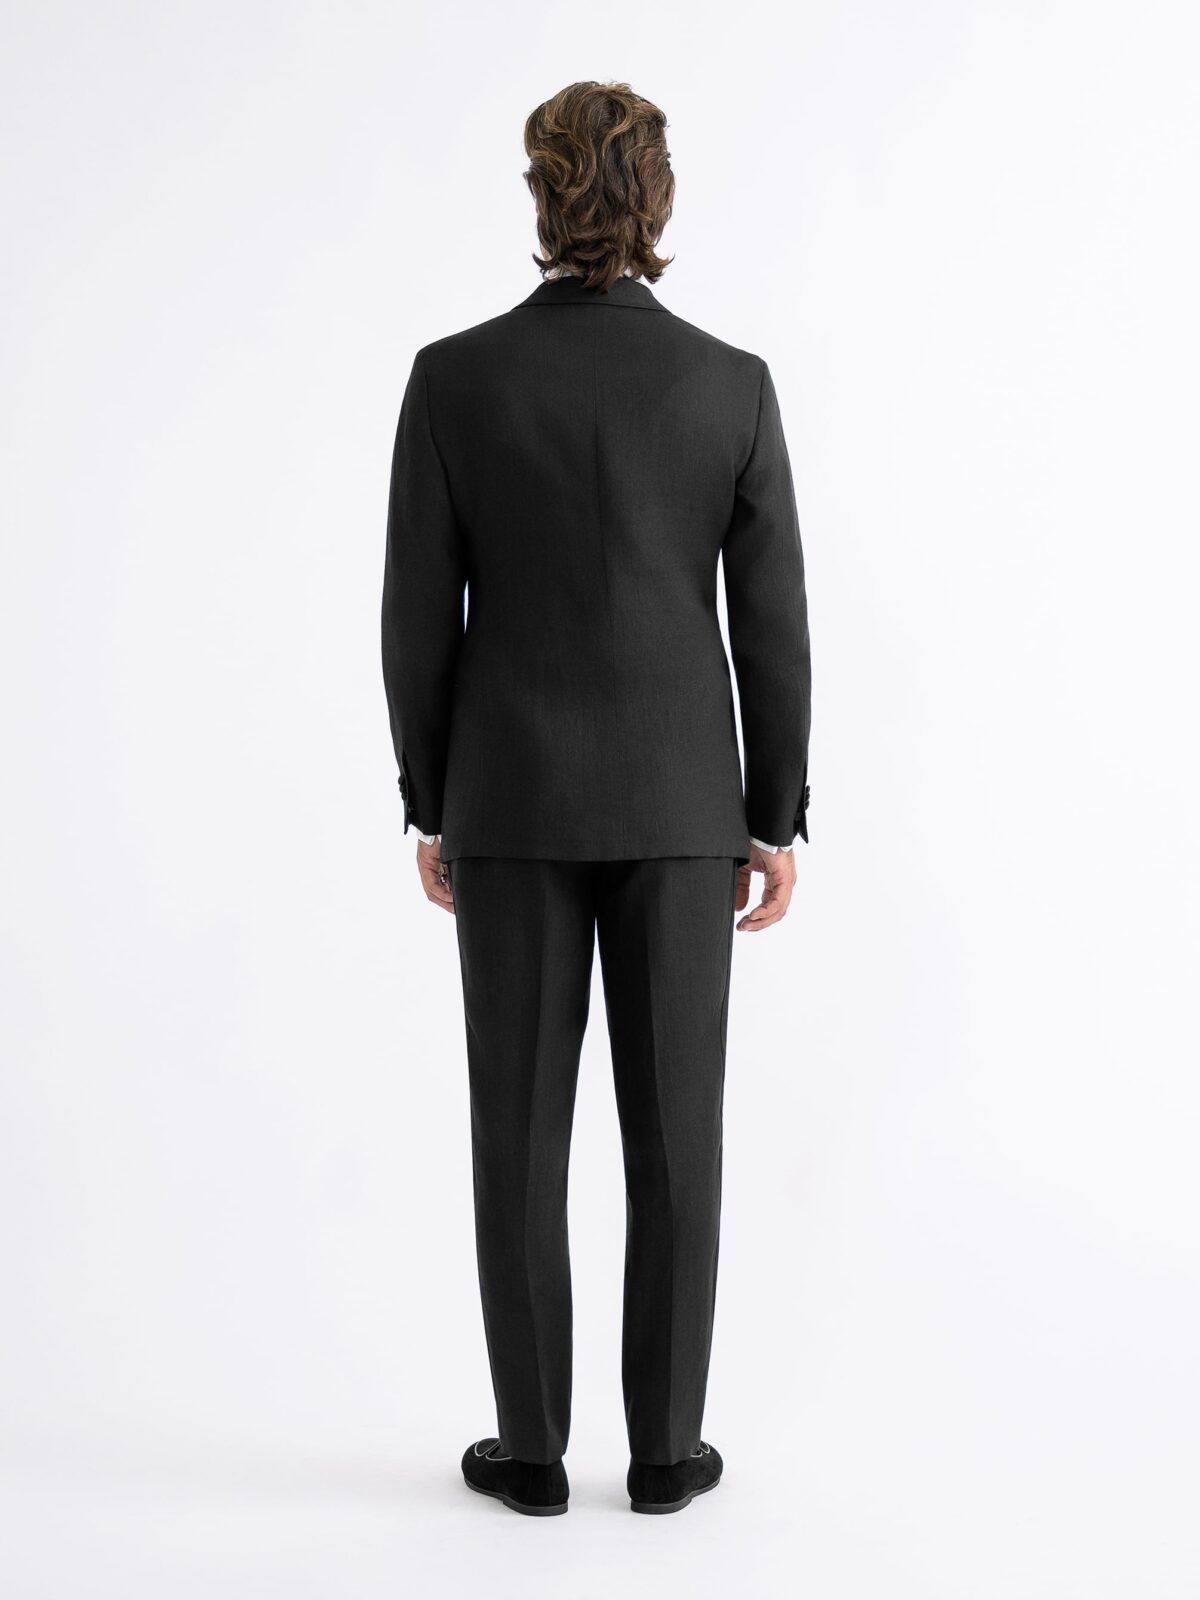 Black Irish Linen Tuxedo - Custom Fit Tailored Clothing